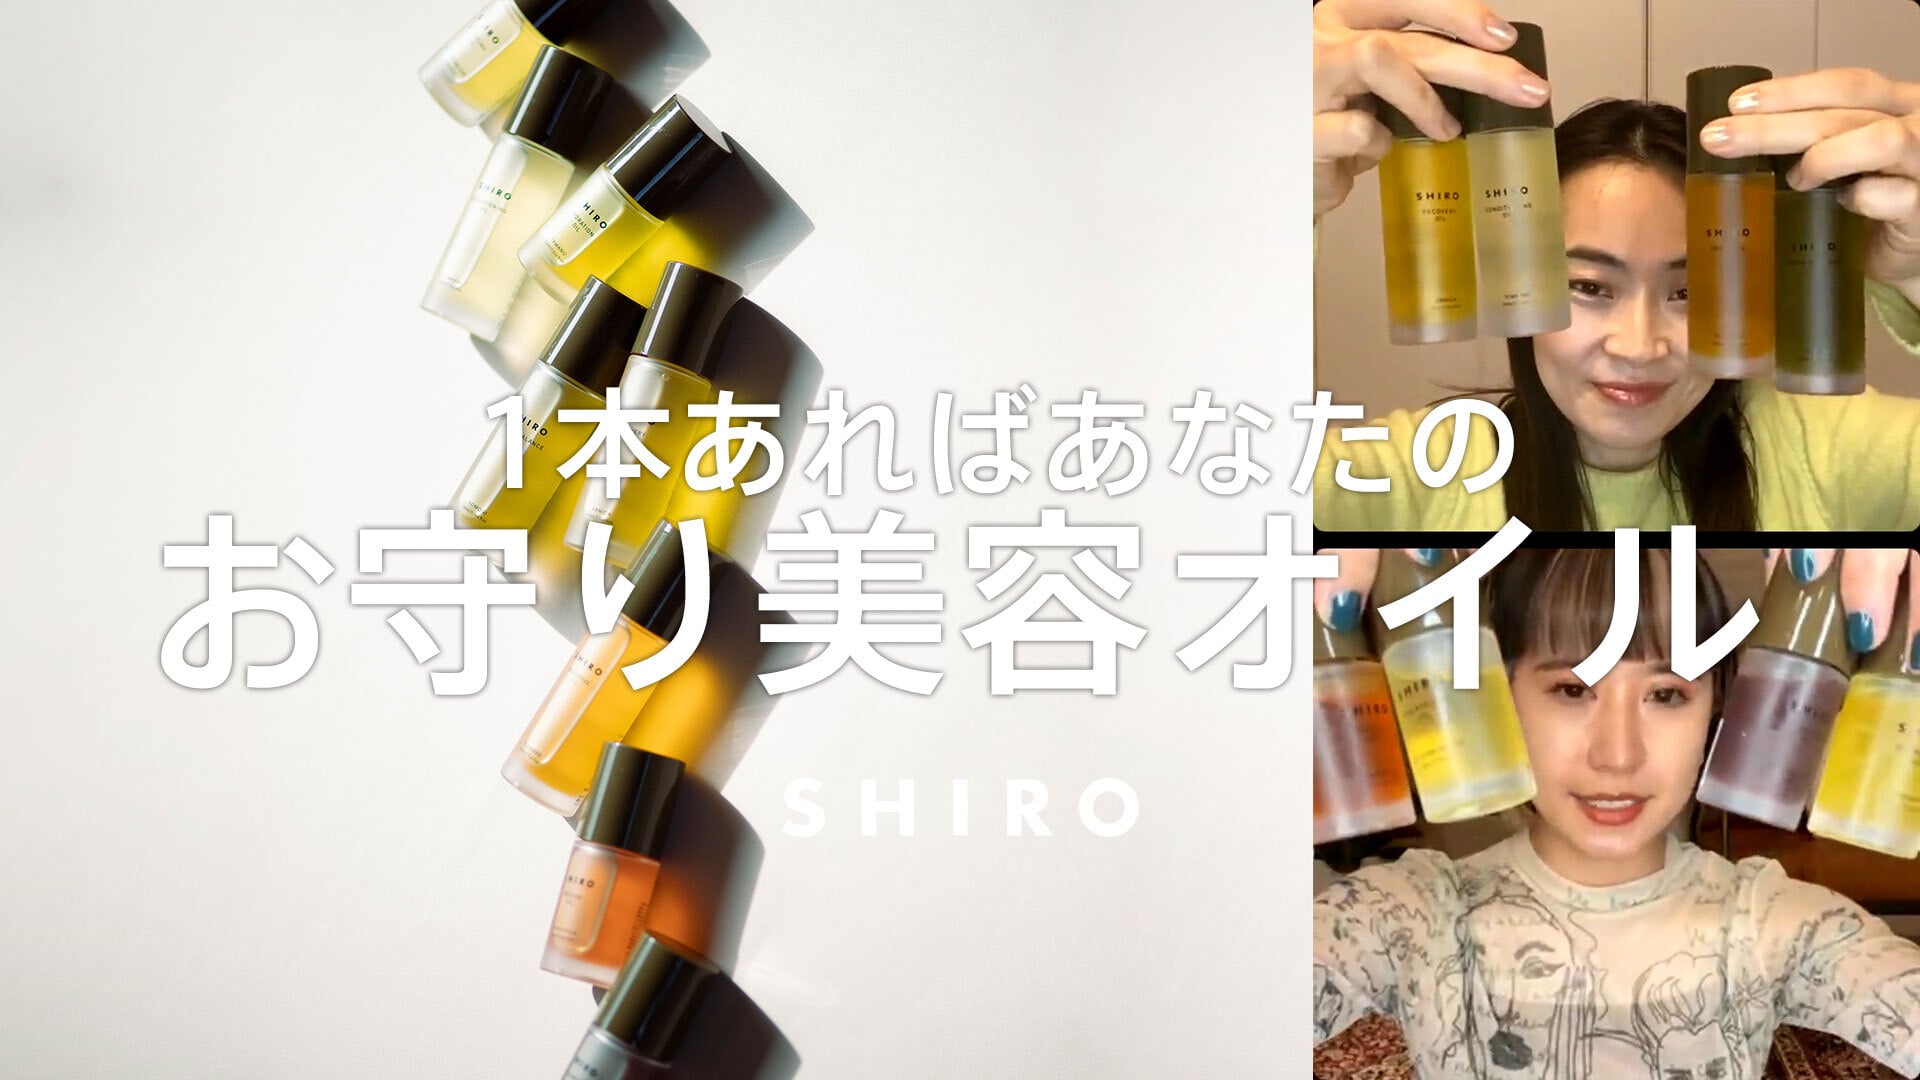 SHIRO YouTube 2022 02